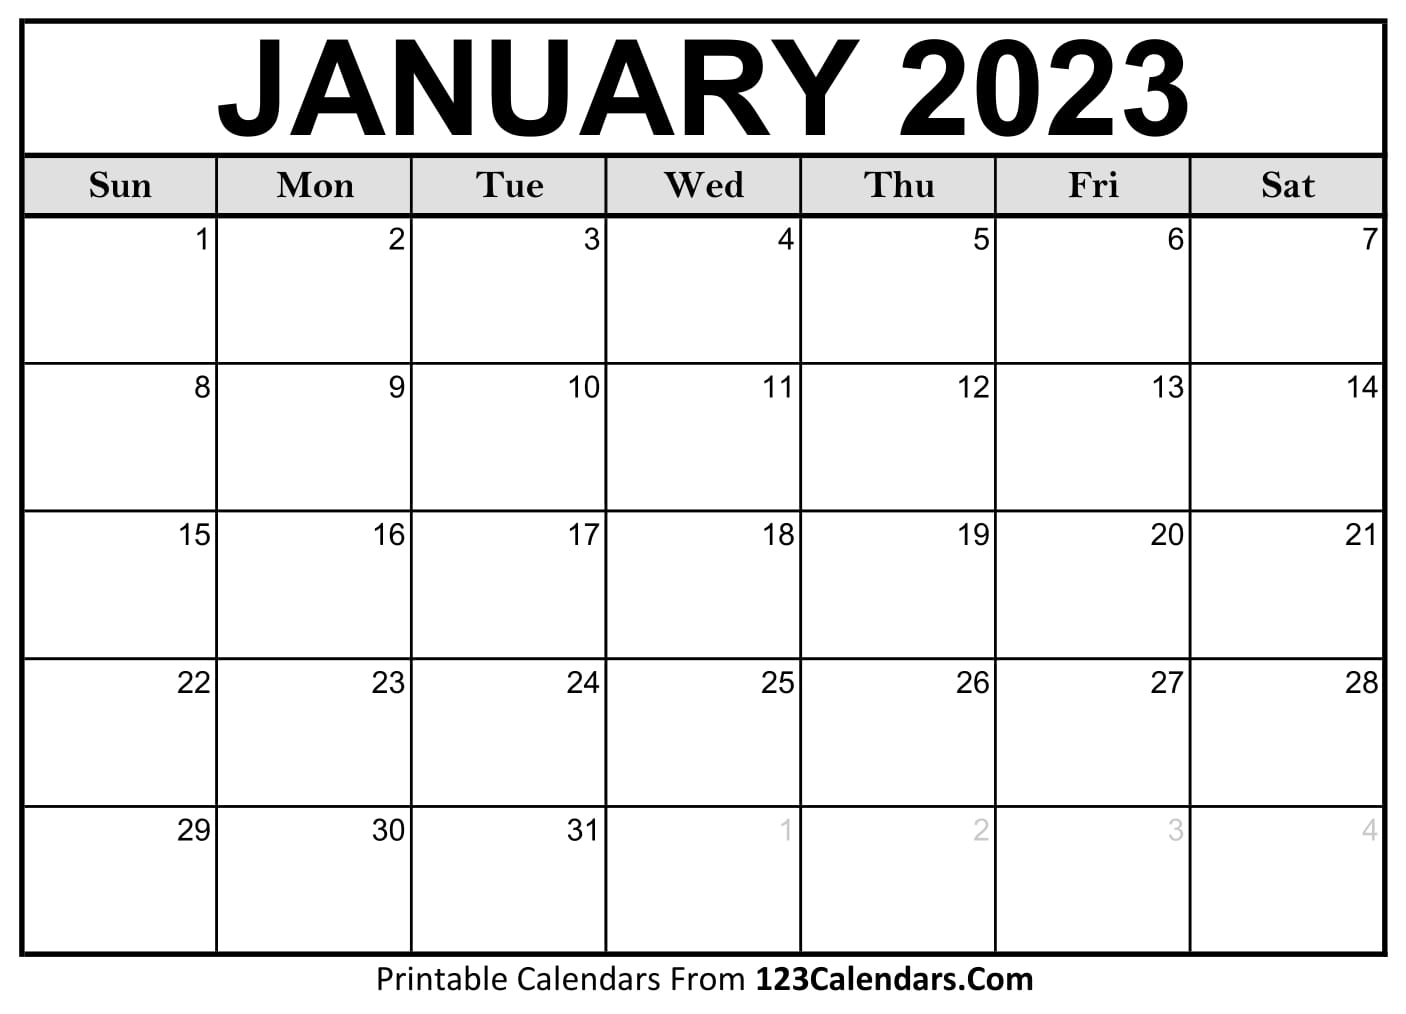 january 2023 calendar free printable calendar - printable january 2023